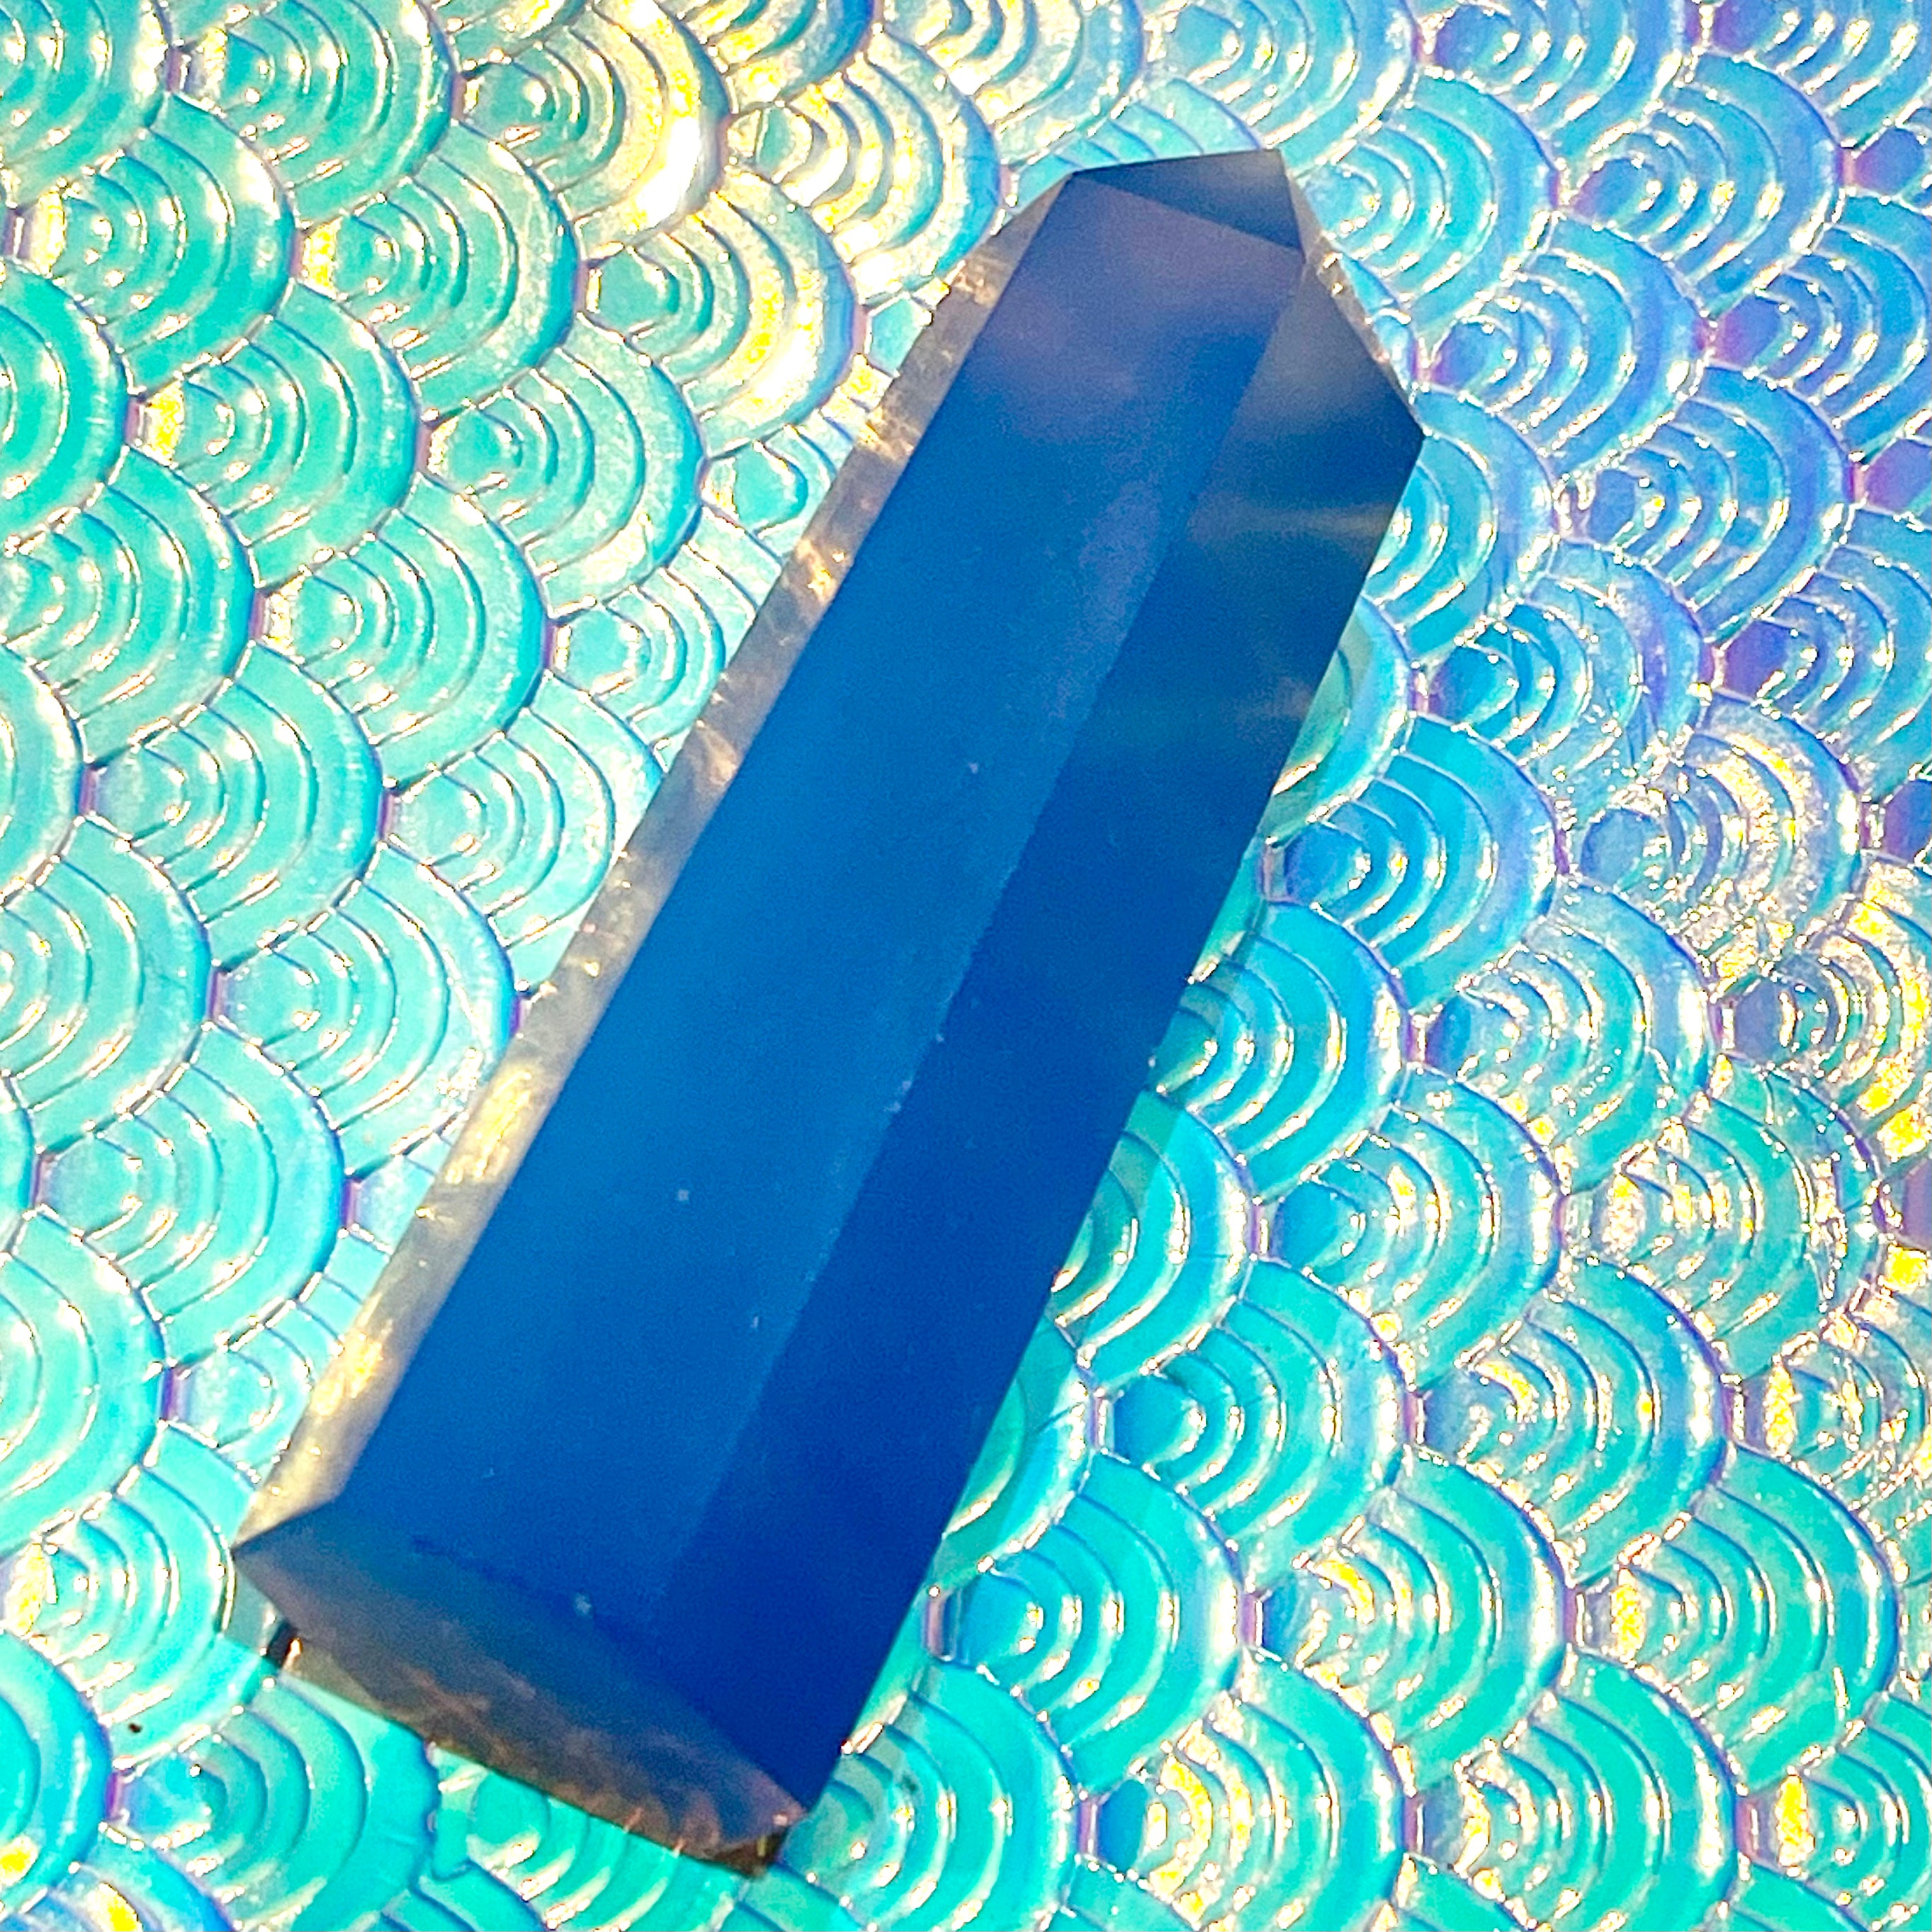 Blue Opal Tower Healing Crystal